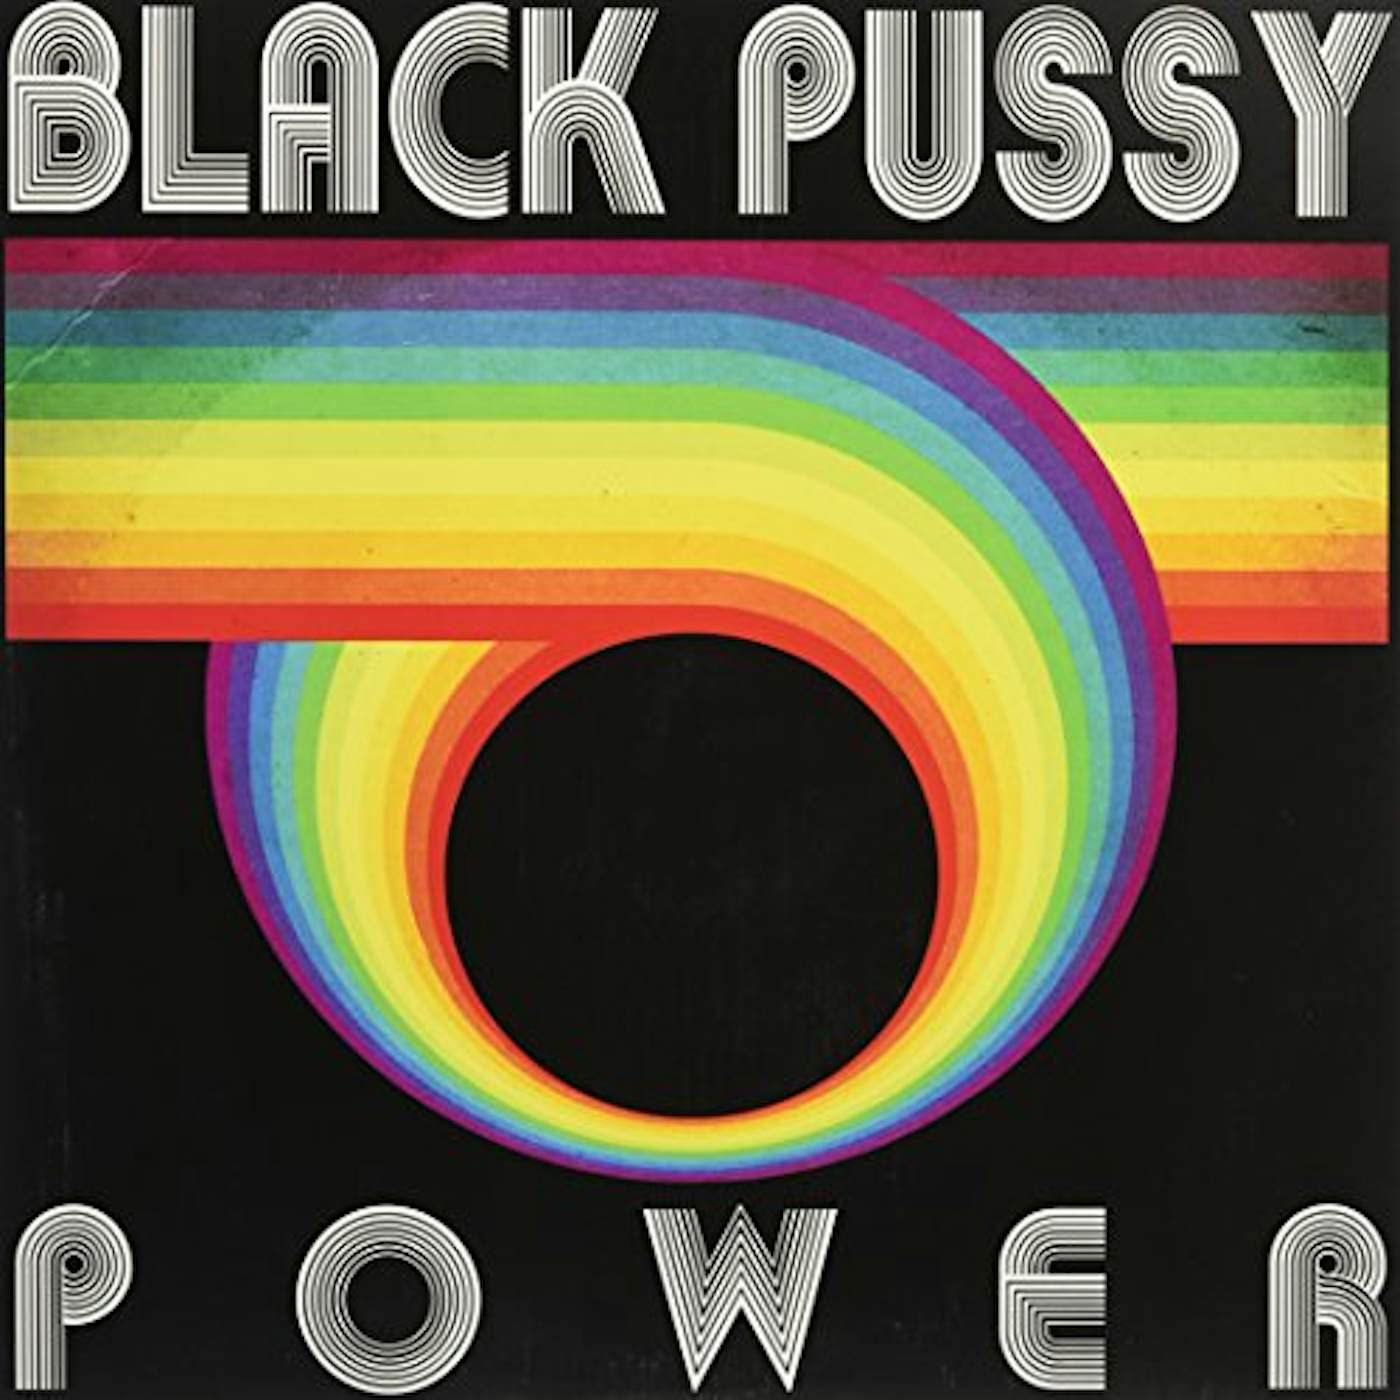 Black Pussy Power Vinyl Record